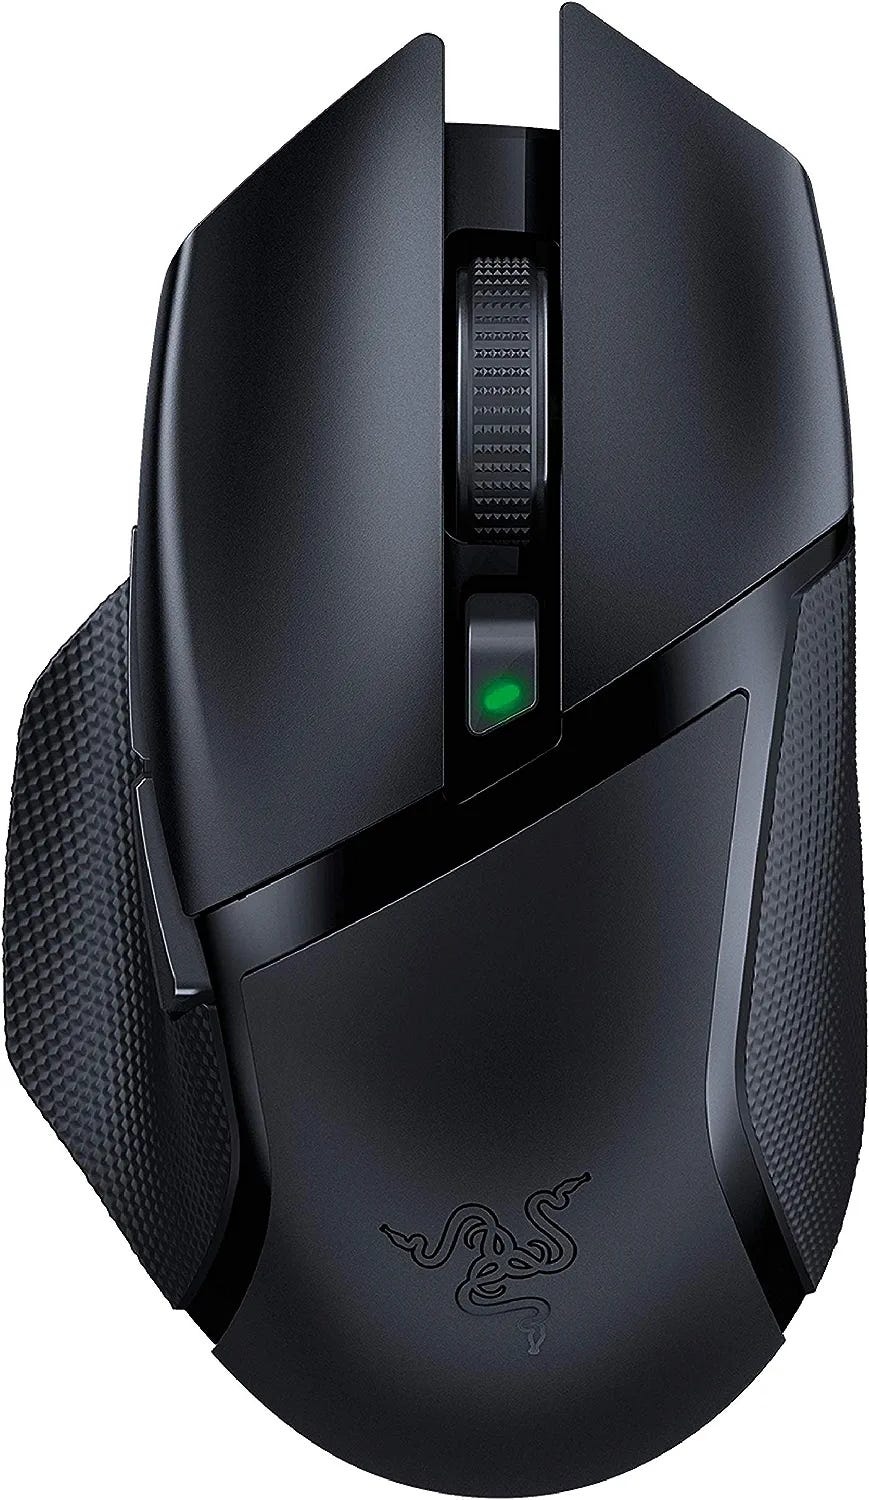 The Razer Basilisk X Hyperspeed Wireless Gaming Mouse